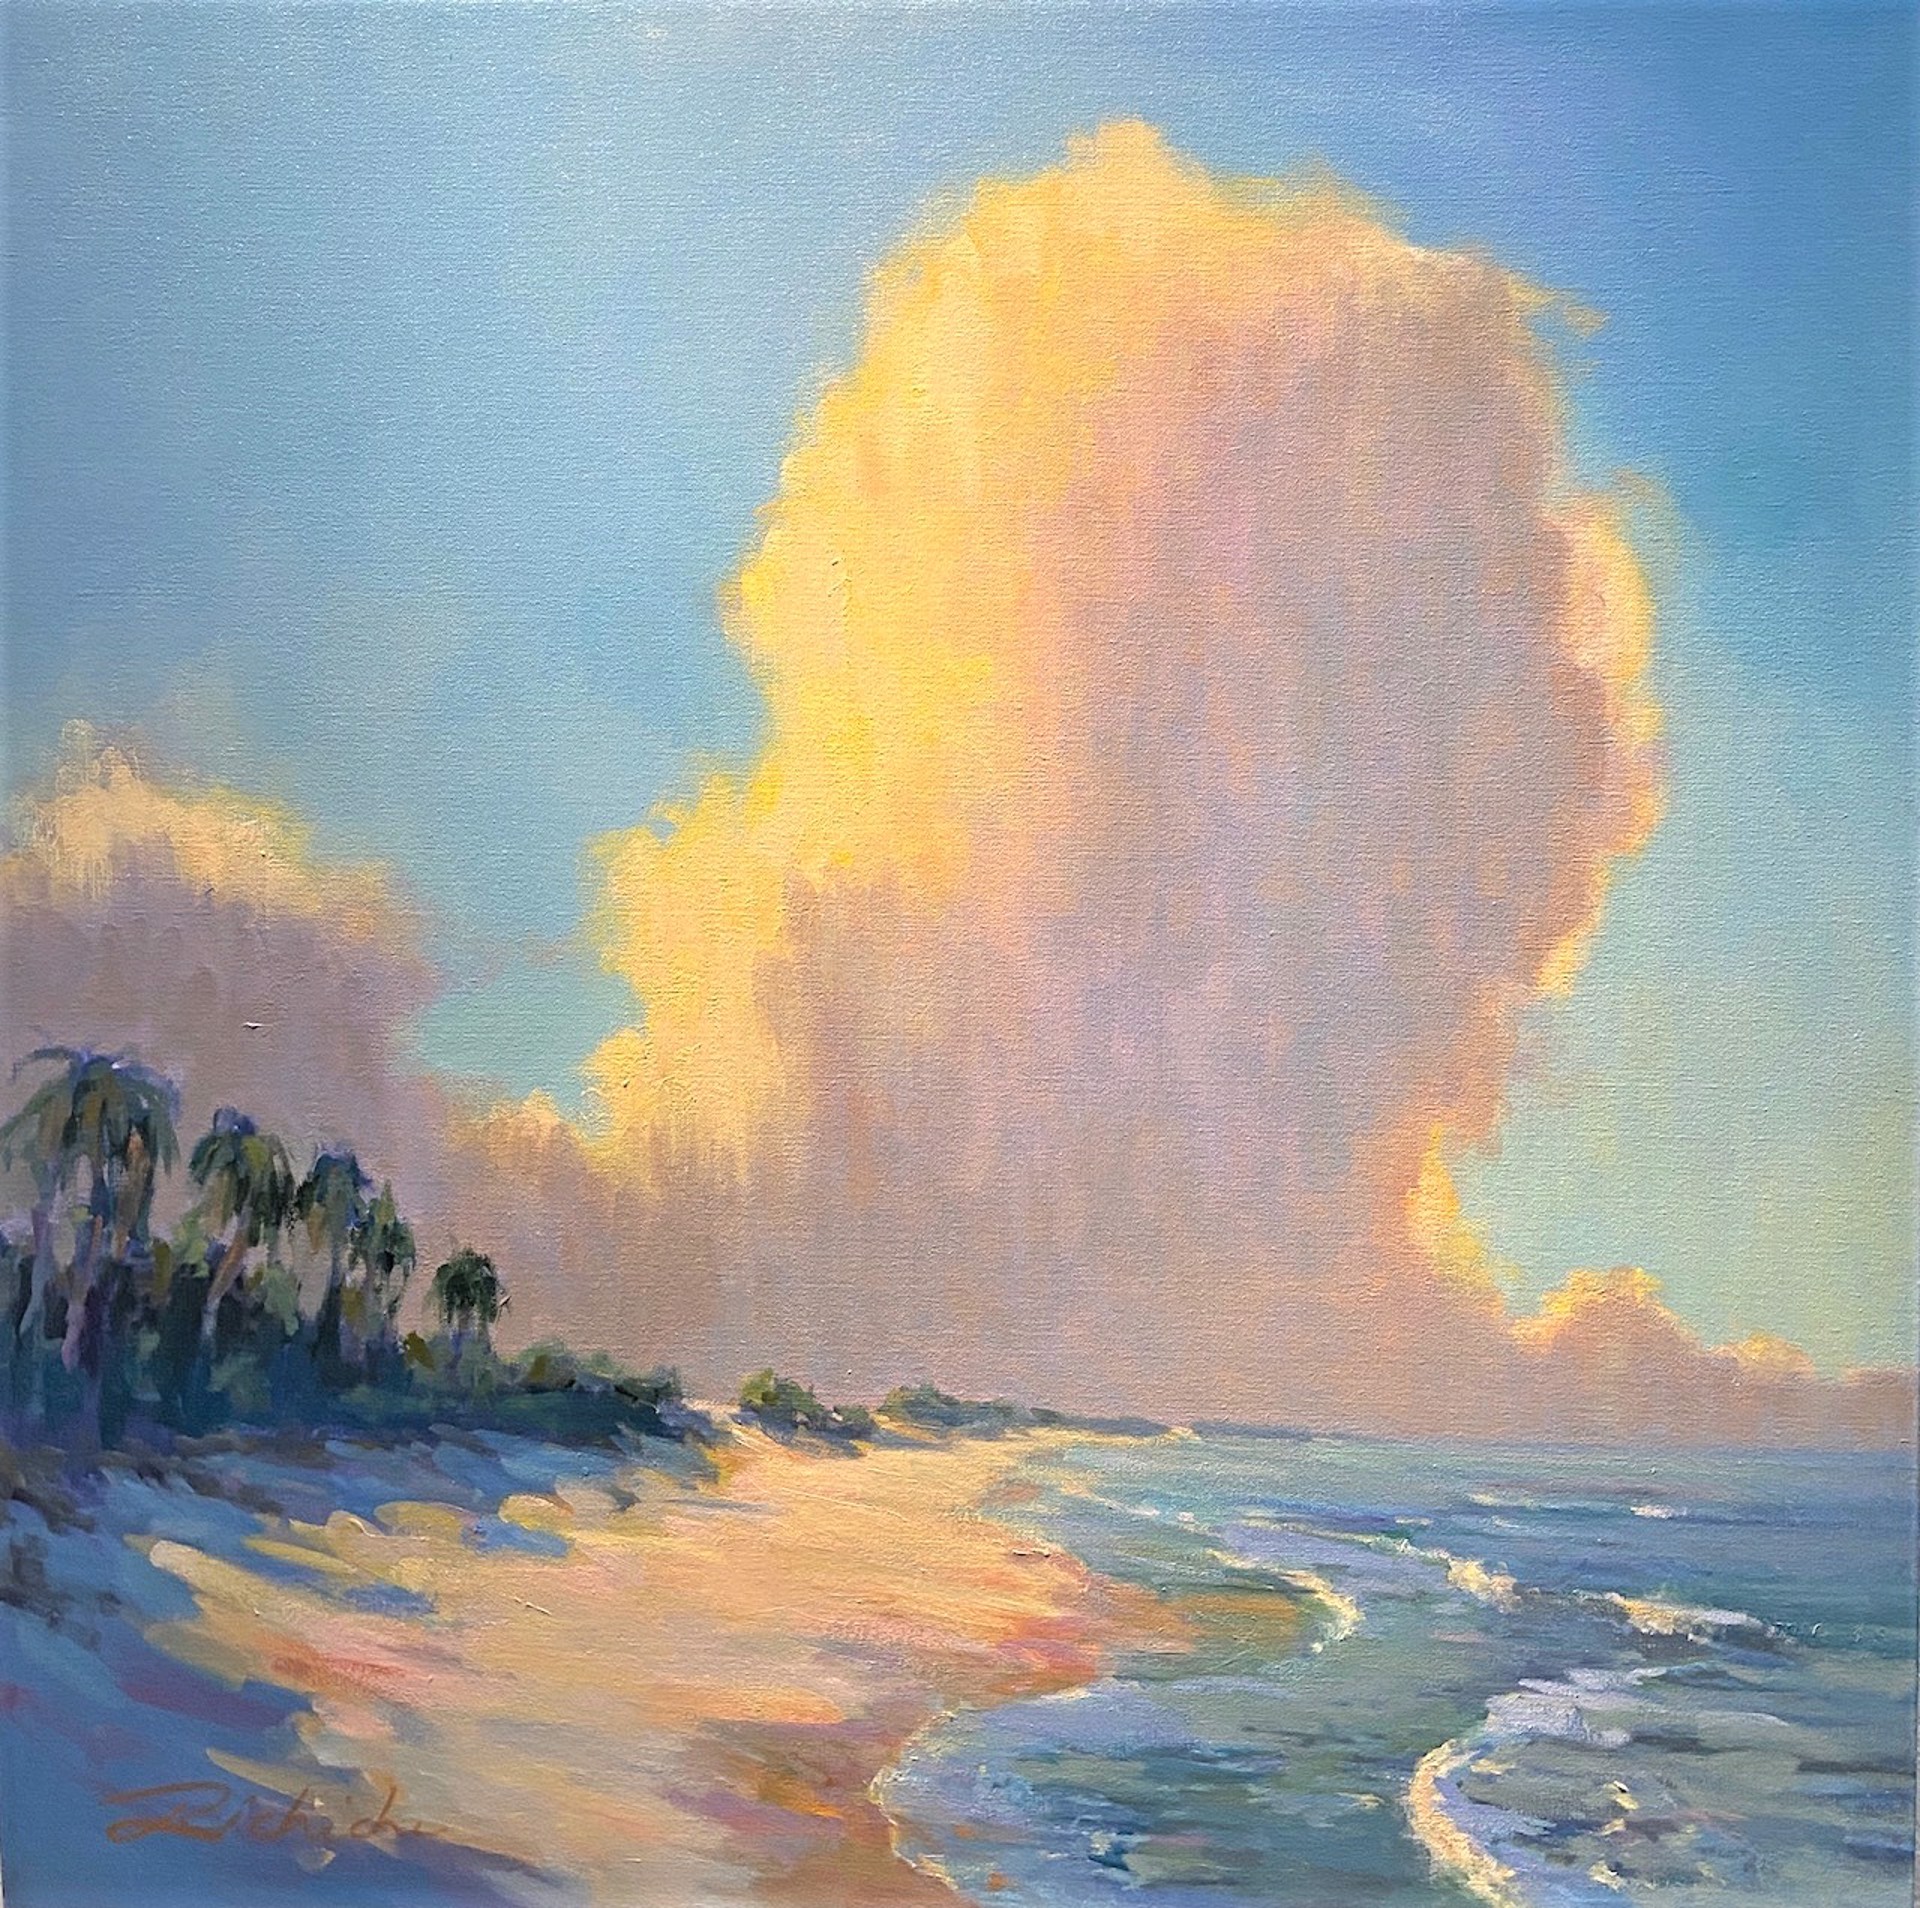 Gulf View by Linda Richichi